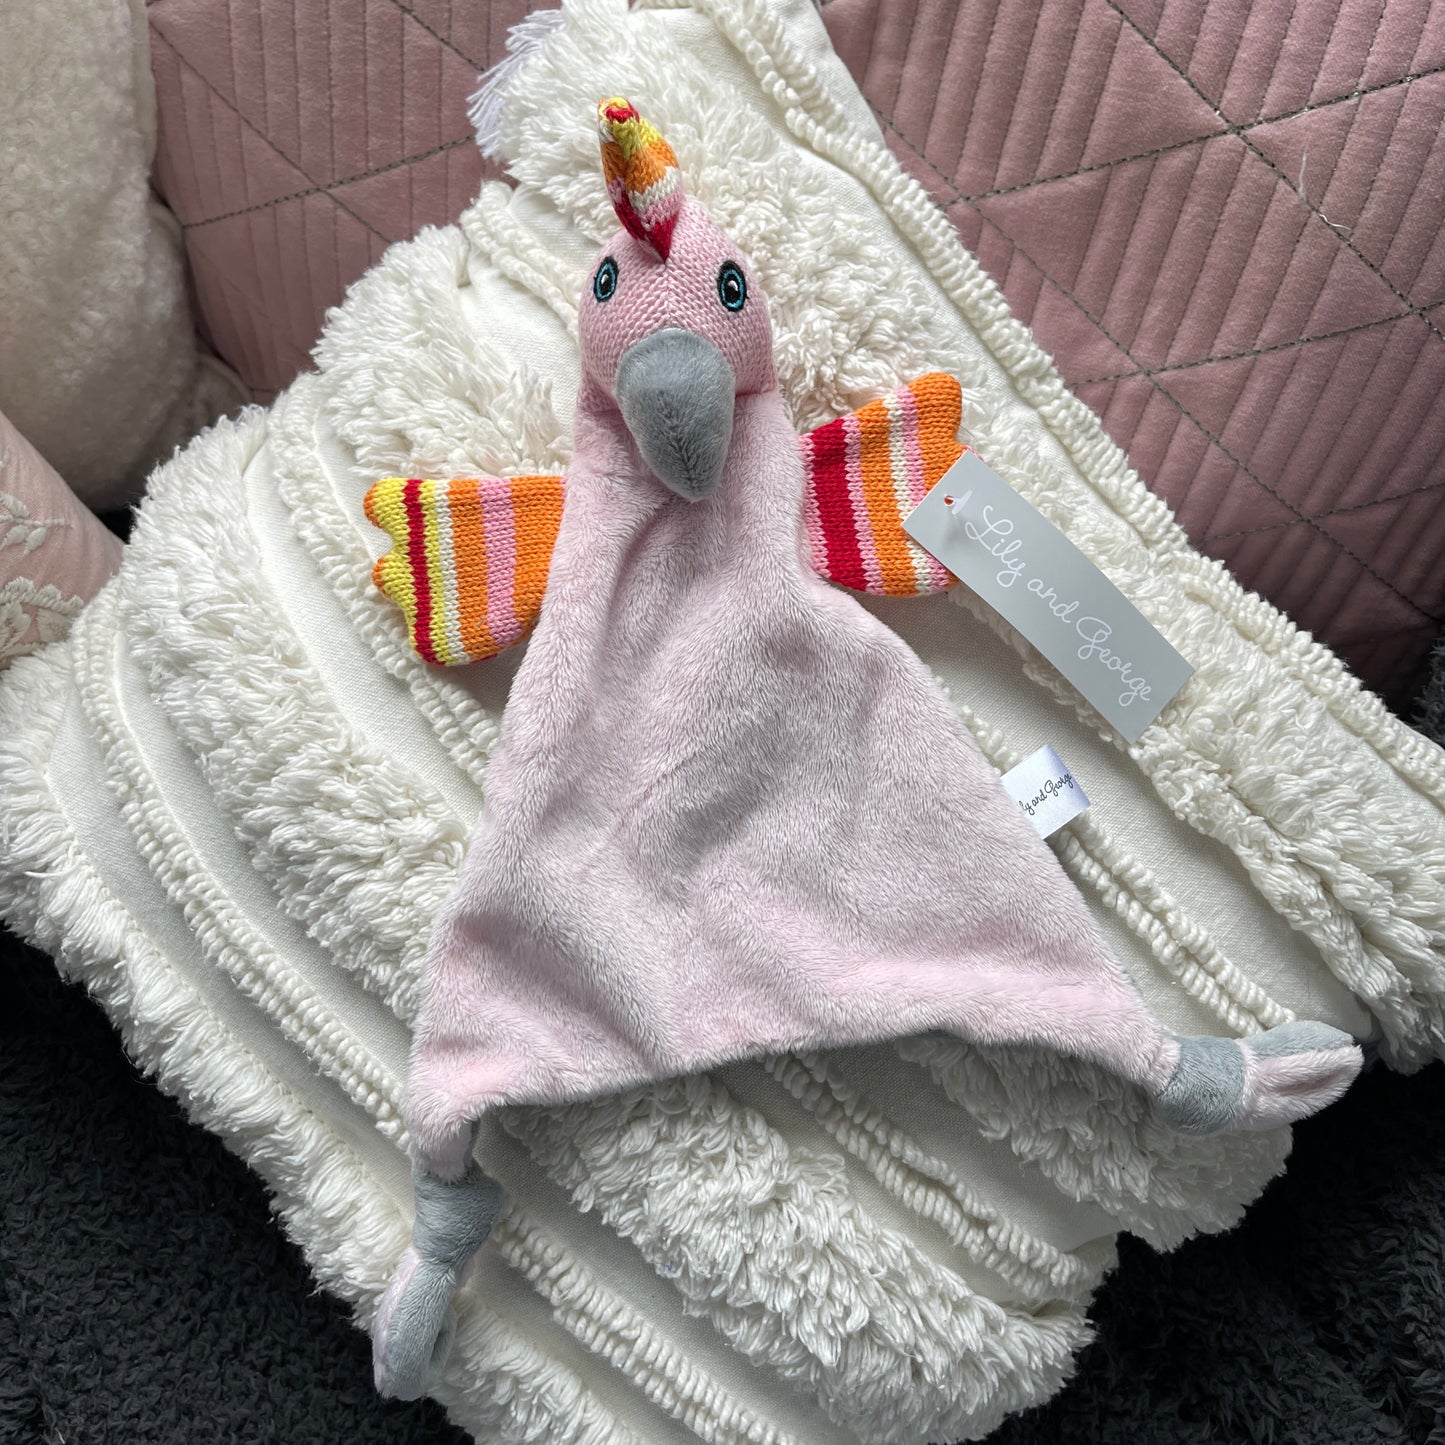 Cockatoo baby comforter.